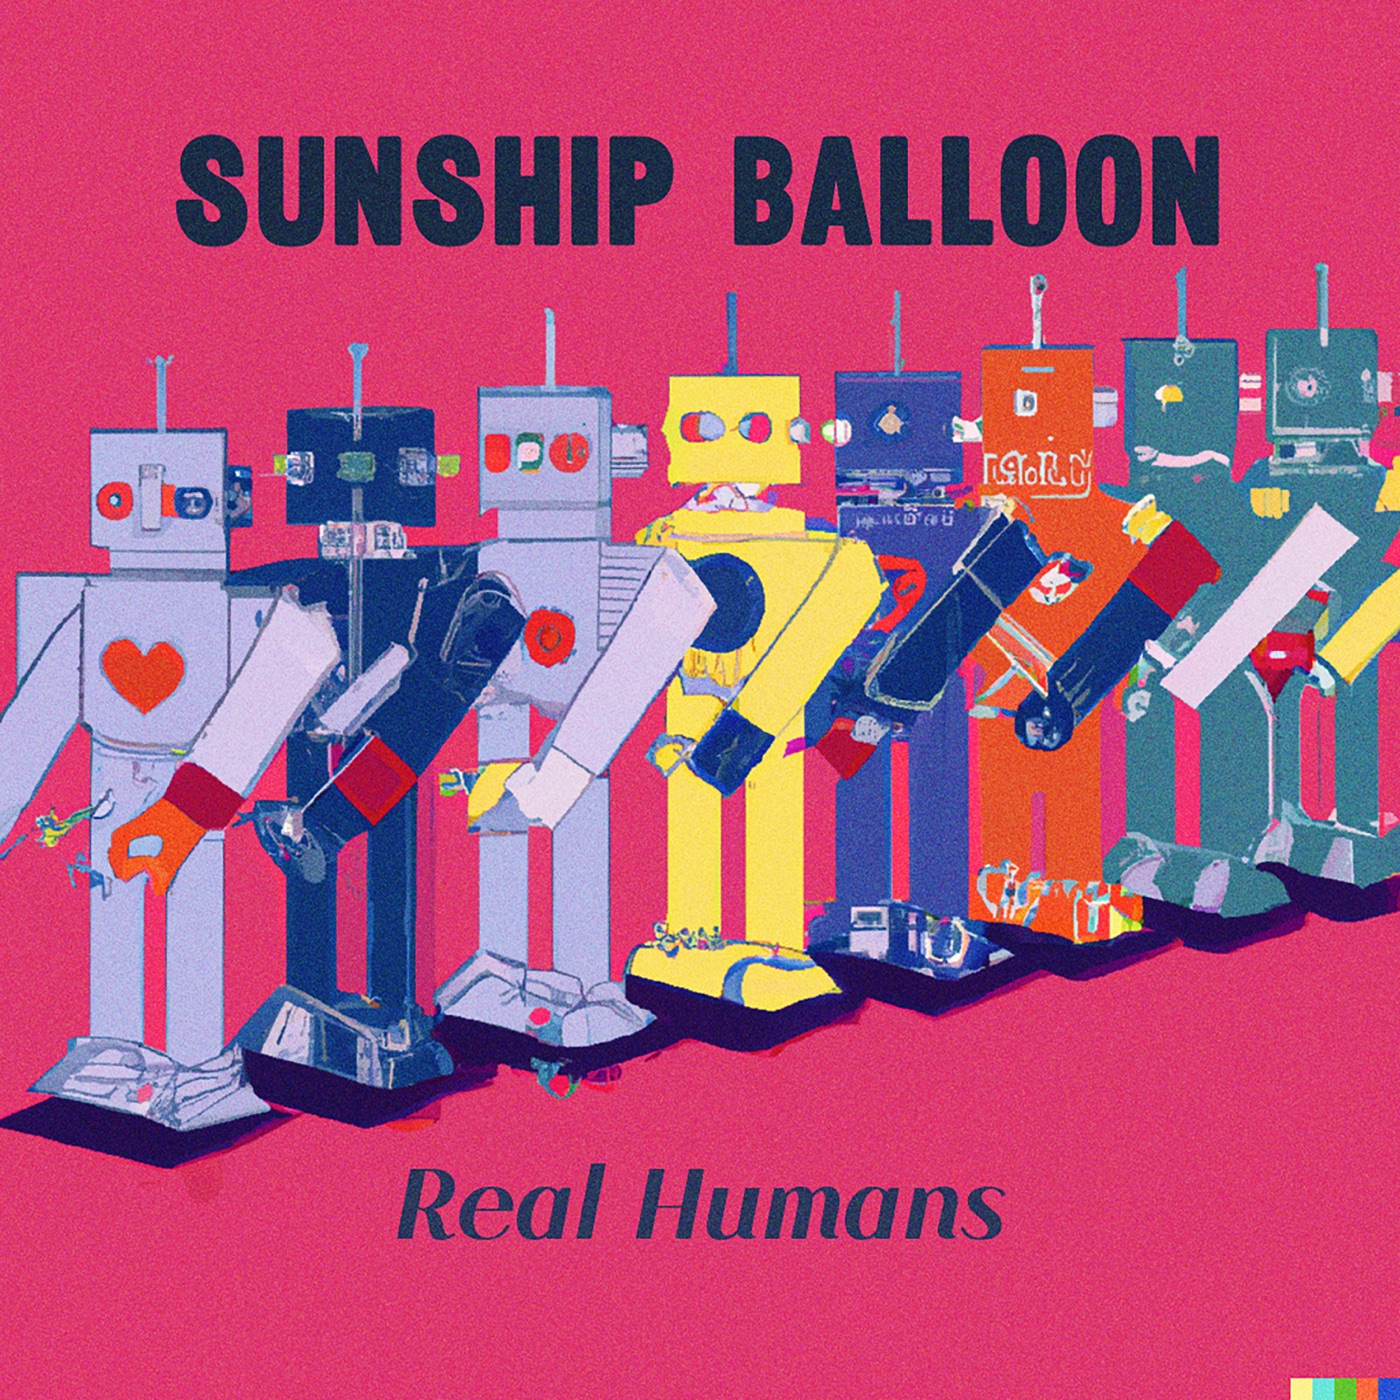 Real Humans by Sunship Balloon, Real Humans